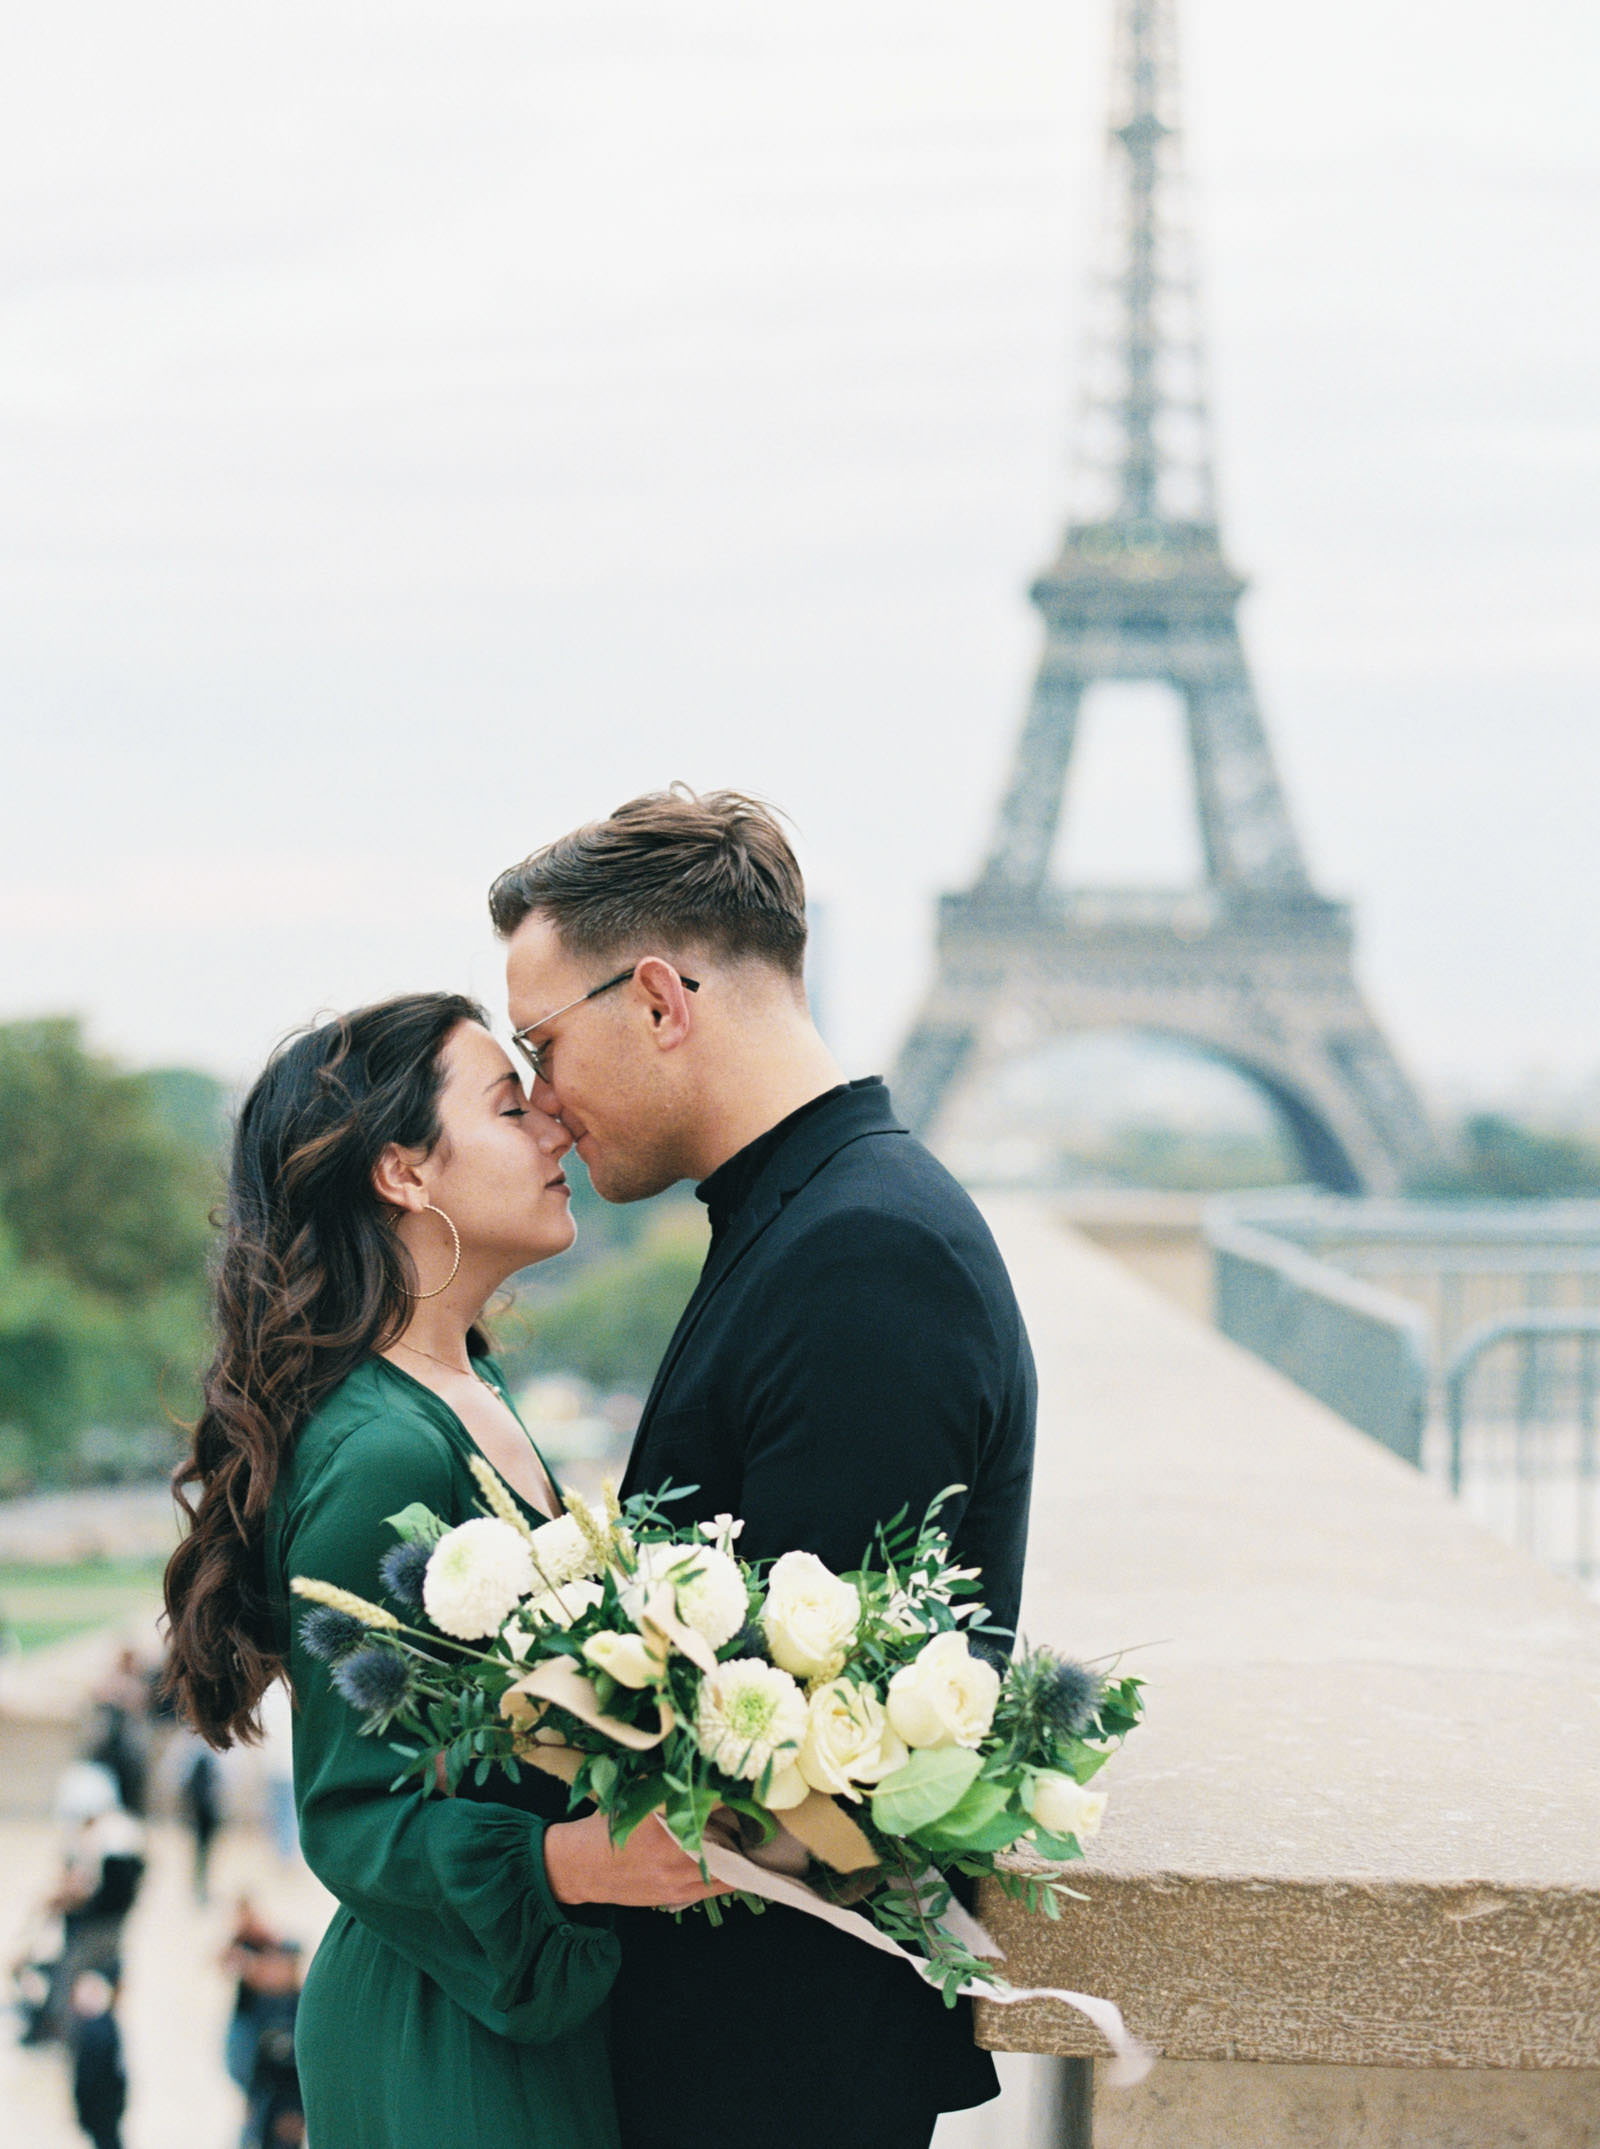 Romantic Eiffel Tower Engagement Photos - KR Moreno